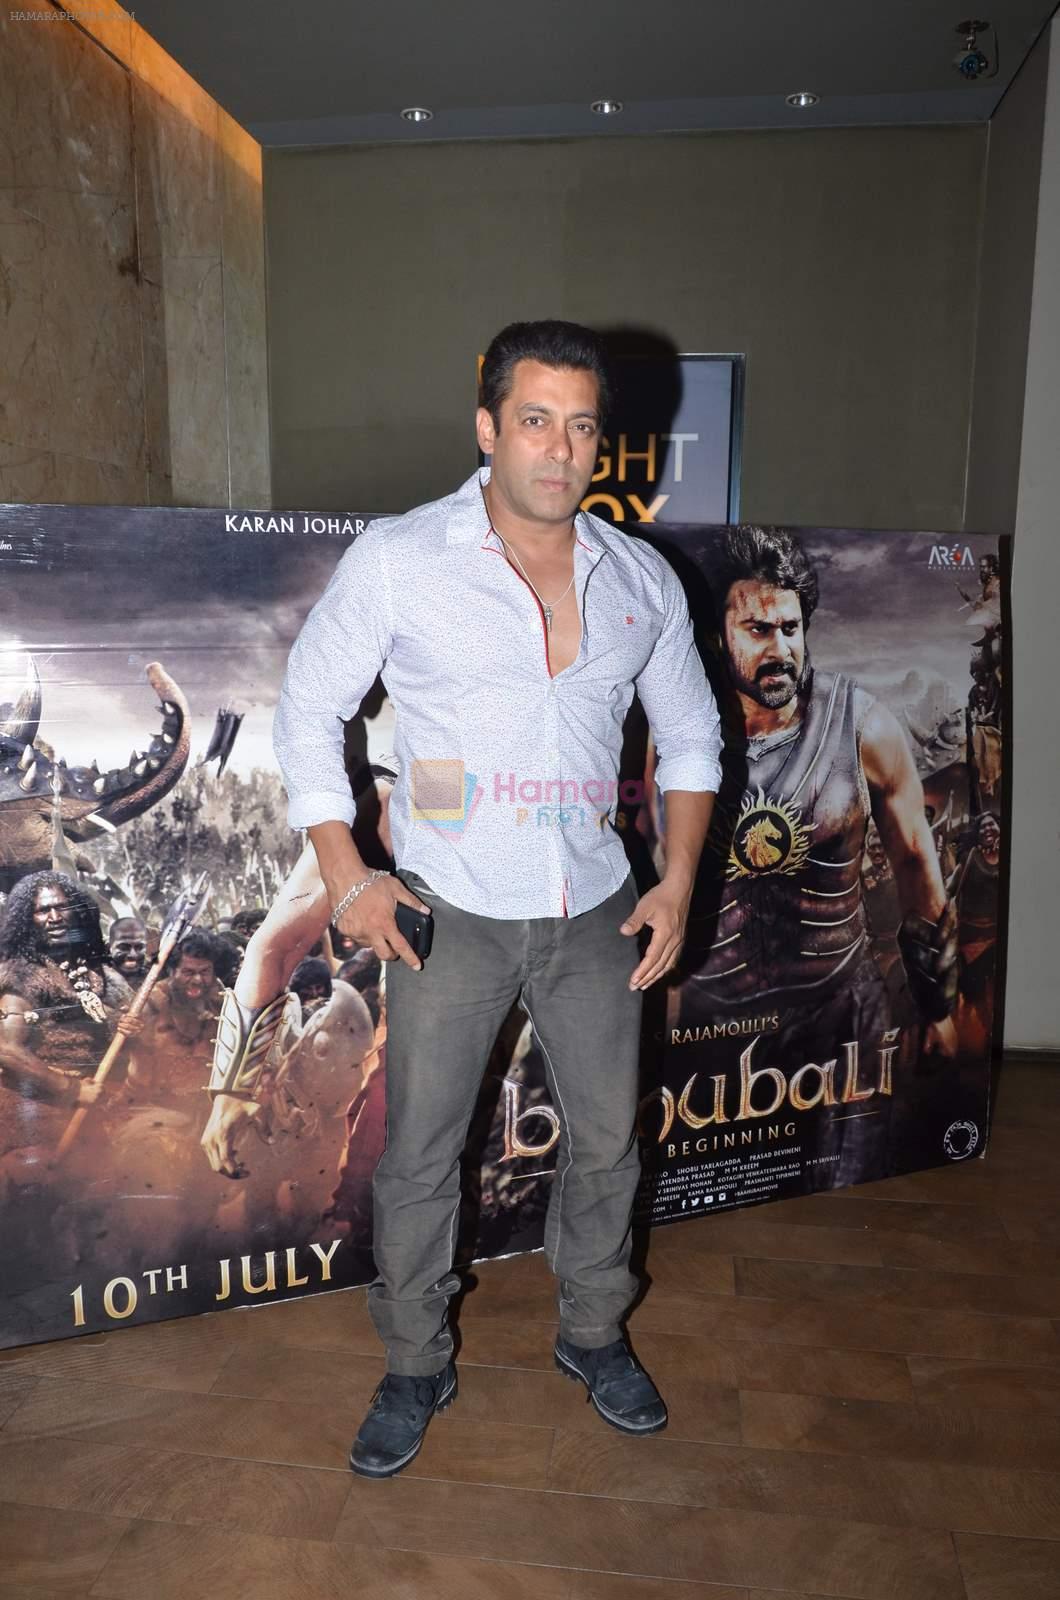 Salman Khan at Bahubali screening in Lightbox on 12th July 2015